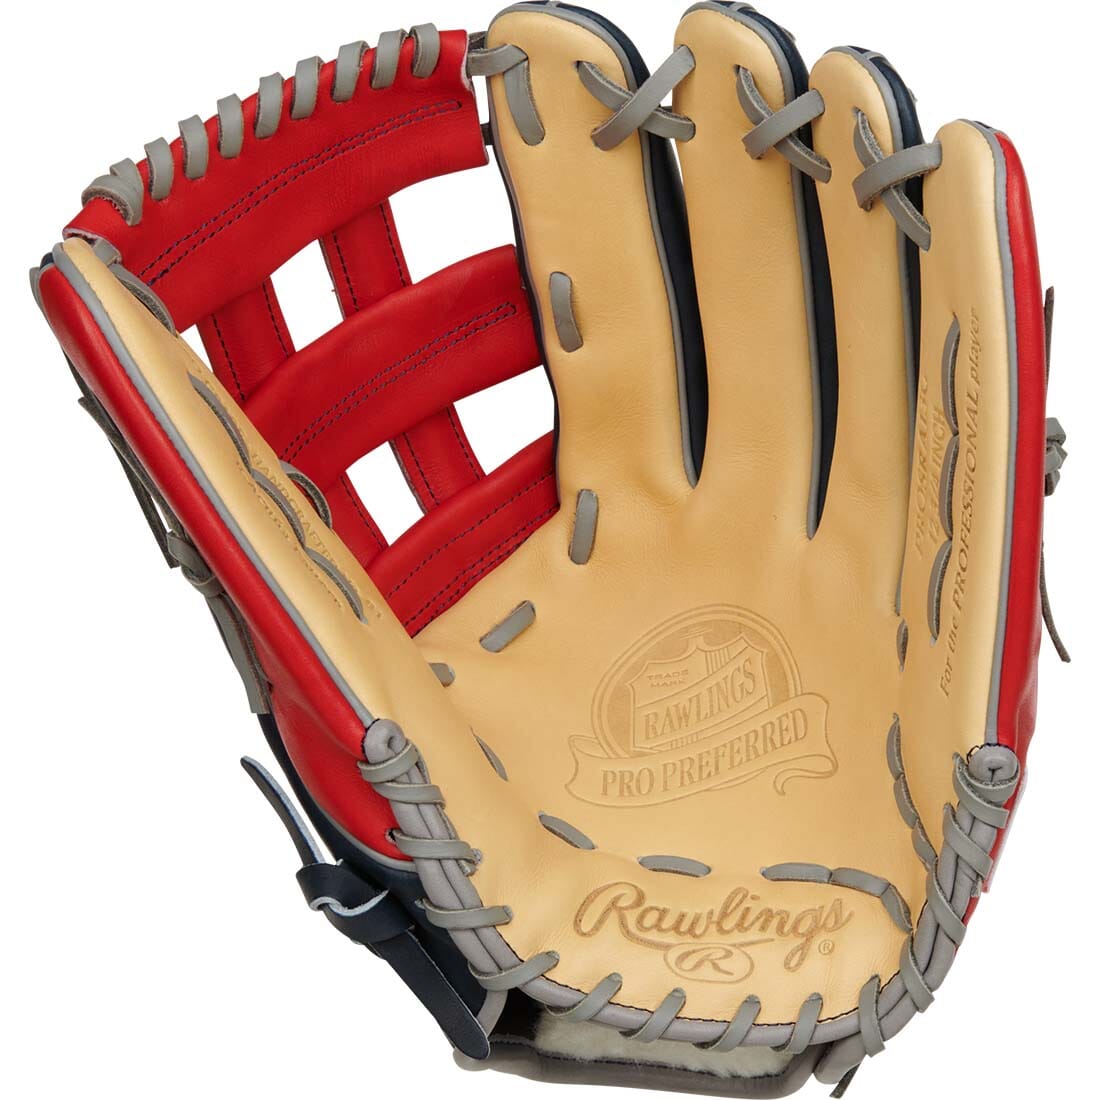 Rawlings 12.75 Pro Preferred Ronald Acuna Jr. Baseball Glove